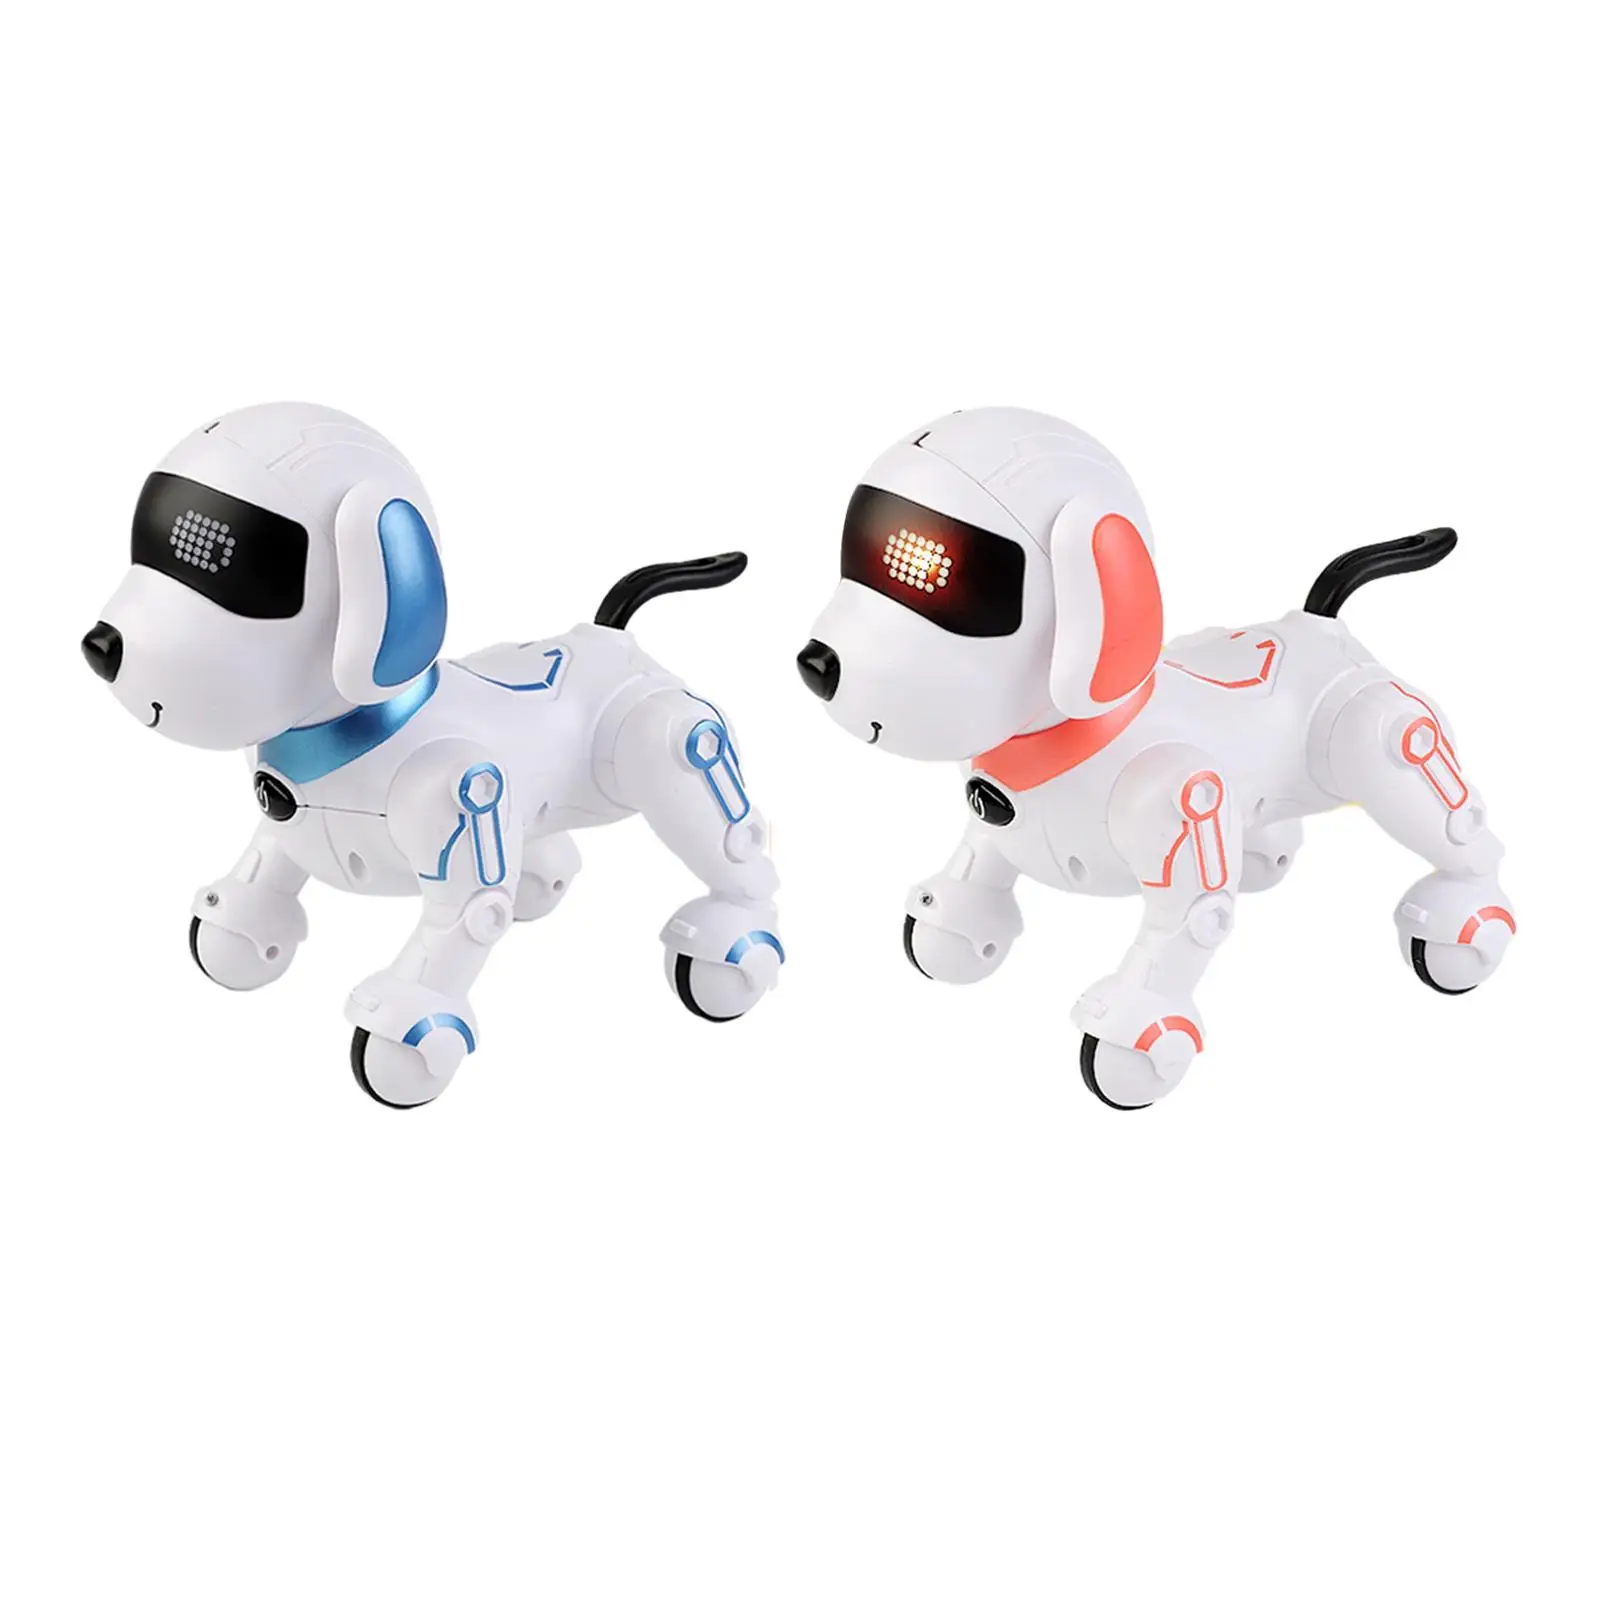 Remote Control Robot Dog Dancing Left Pet Dog Robot Programming Robotic Puppy for Kids Boys and Girls Age 5 6 7 8 9 10 Children